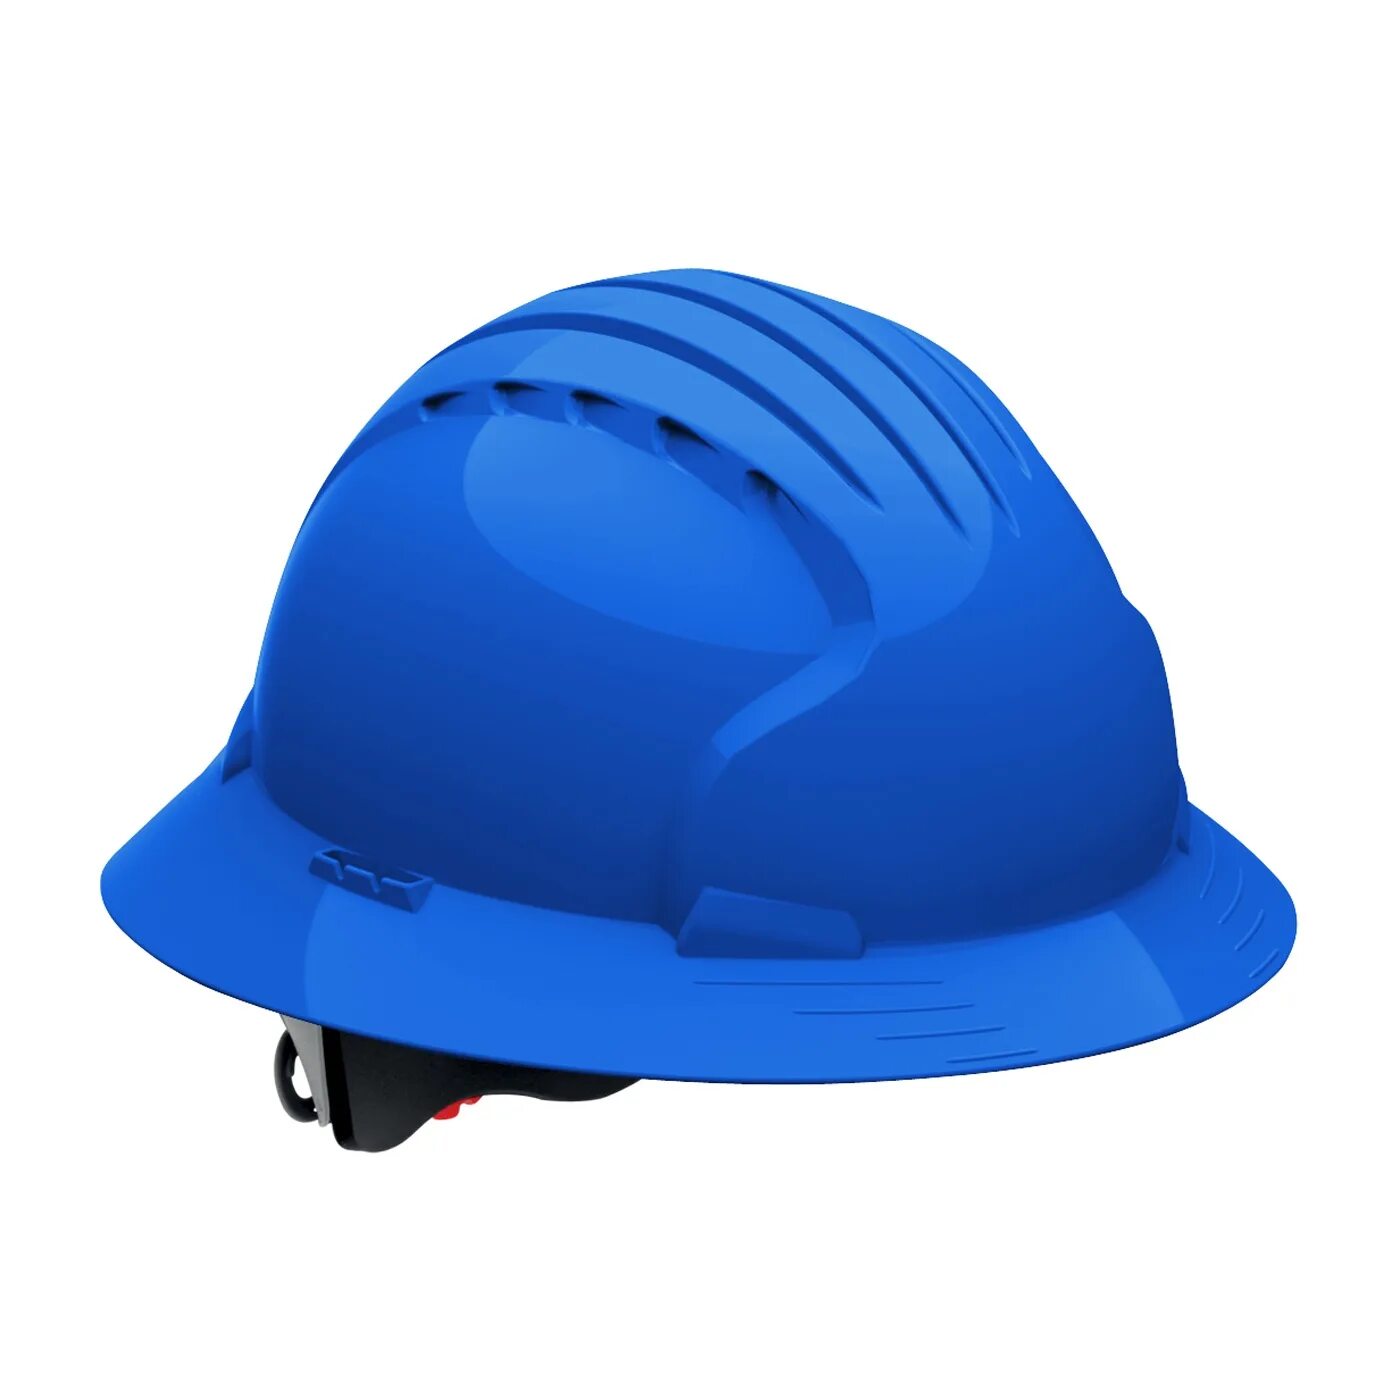 Купить каску шляпу строительную. Каска шляпа. Каска строительная шляпа. Синяя каска. Каска треуголка.